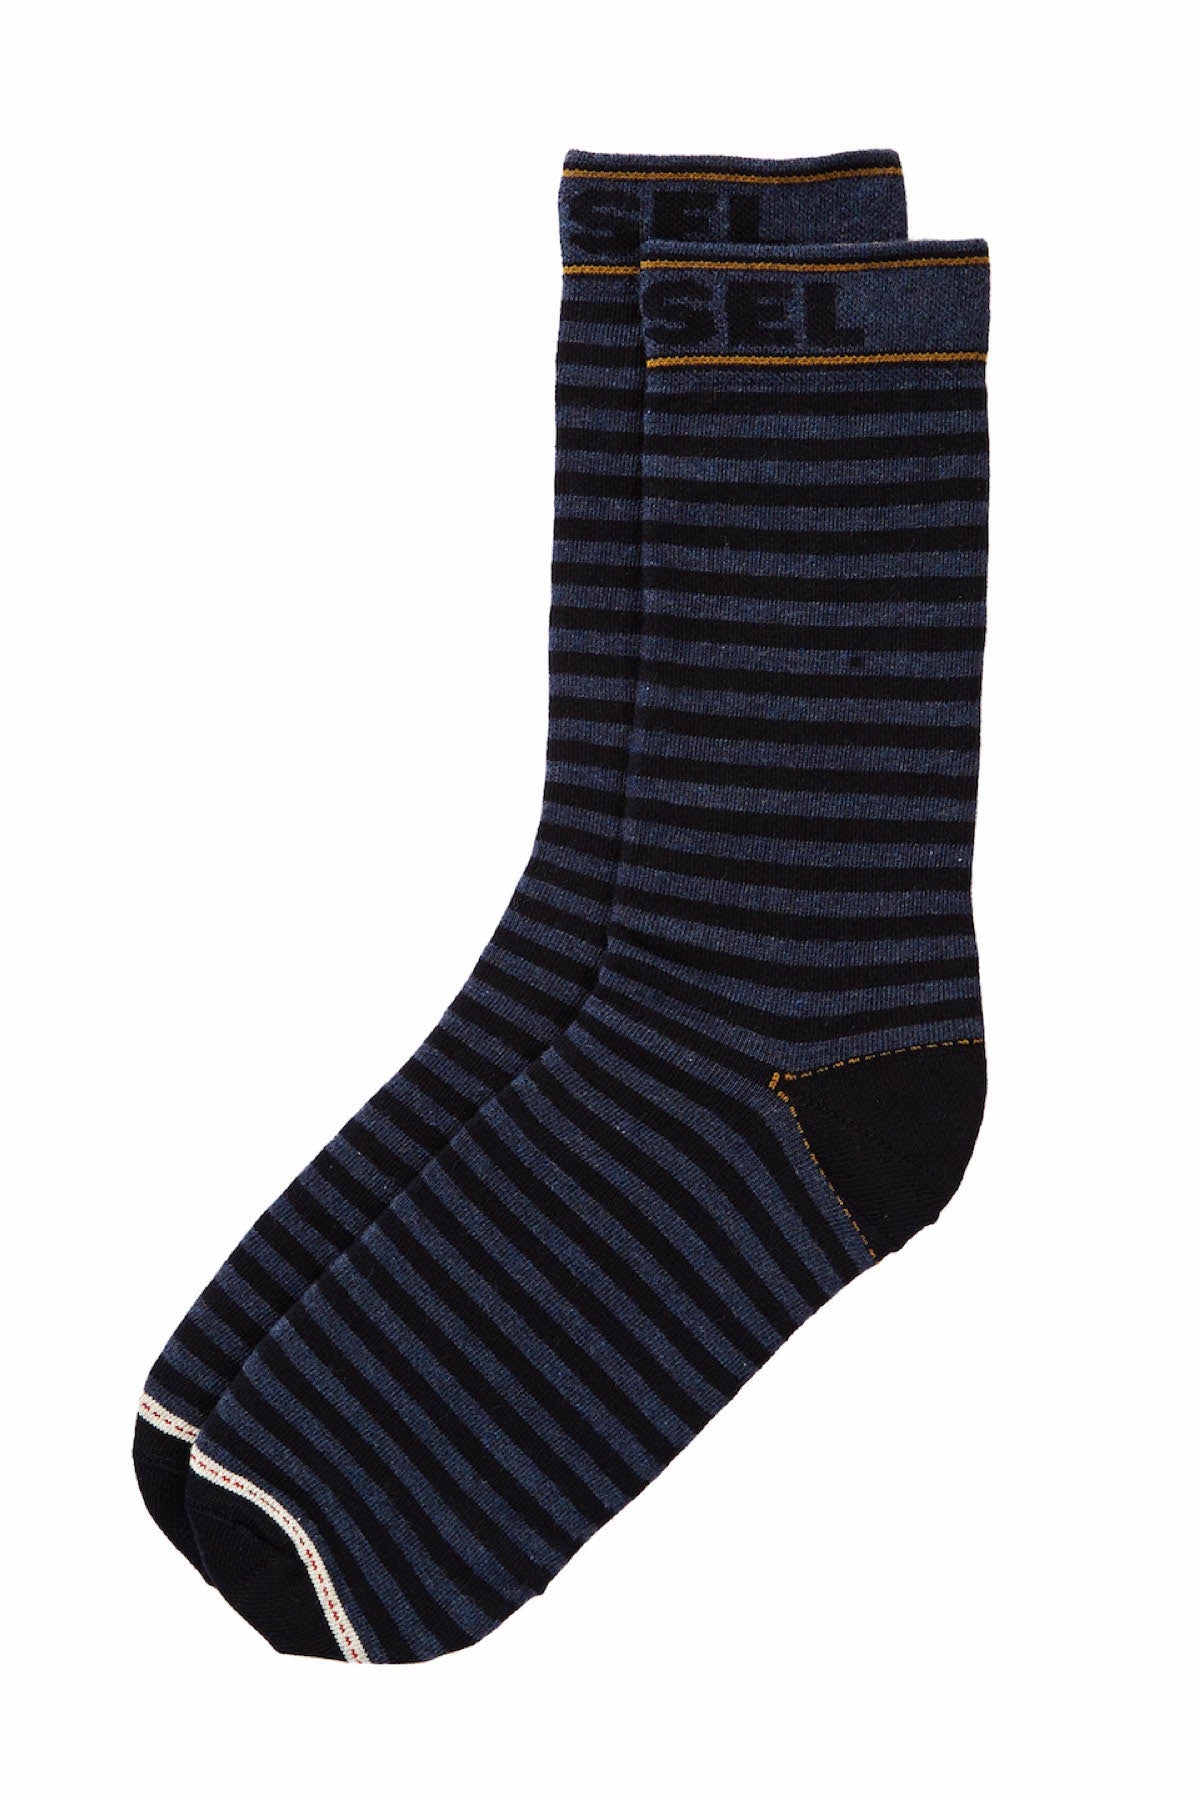 Diesel Navy & Black Stripe Ray Socks